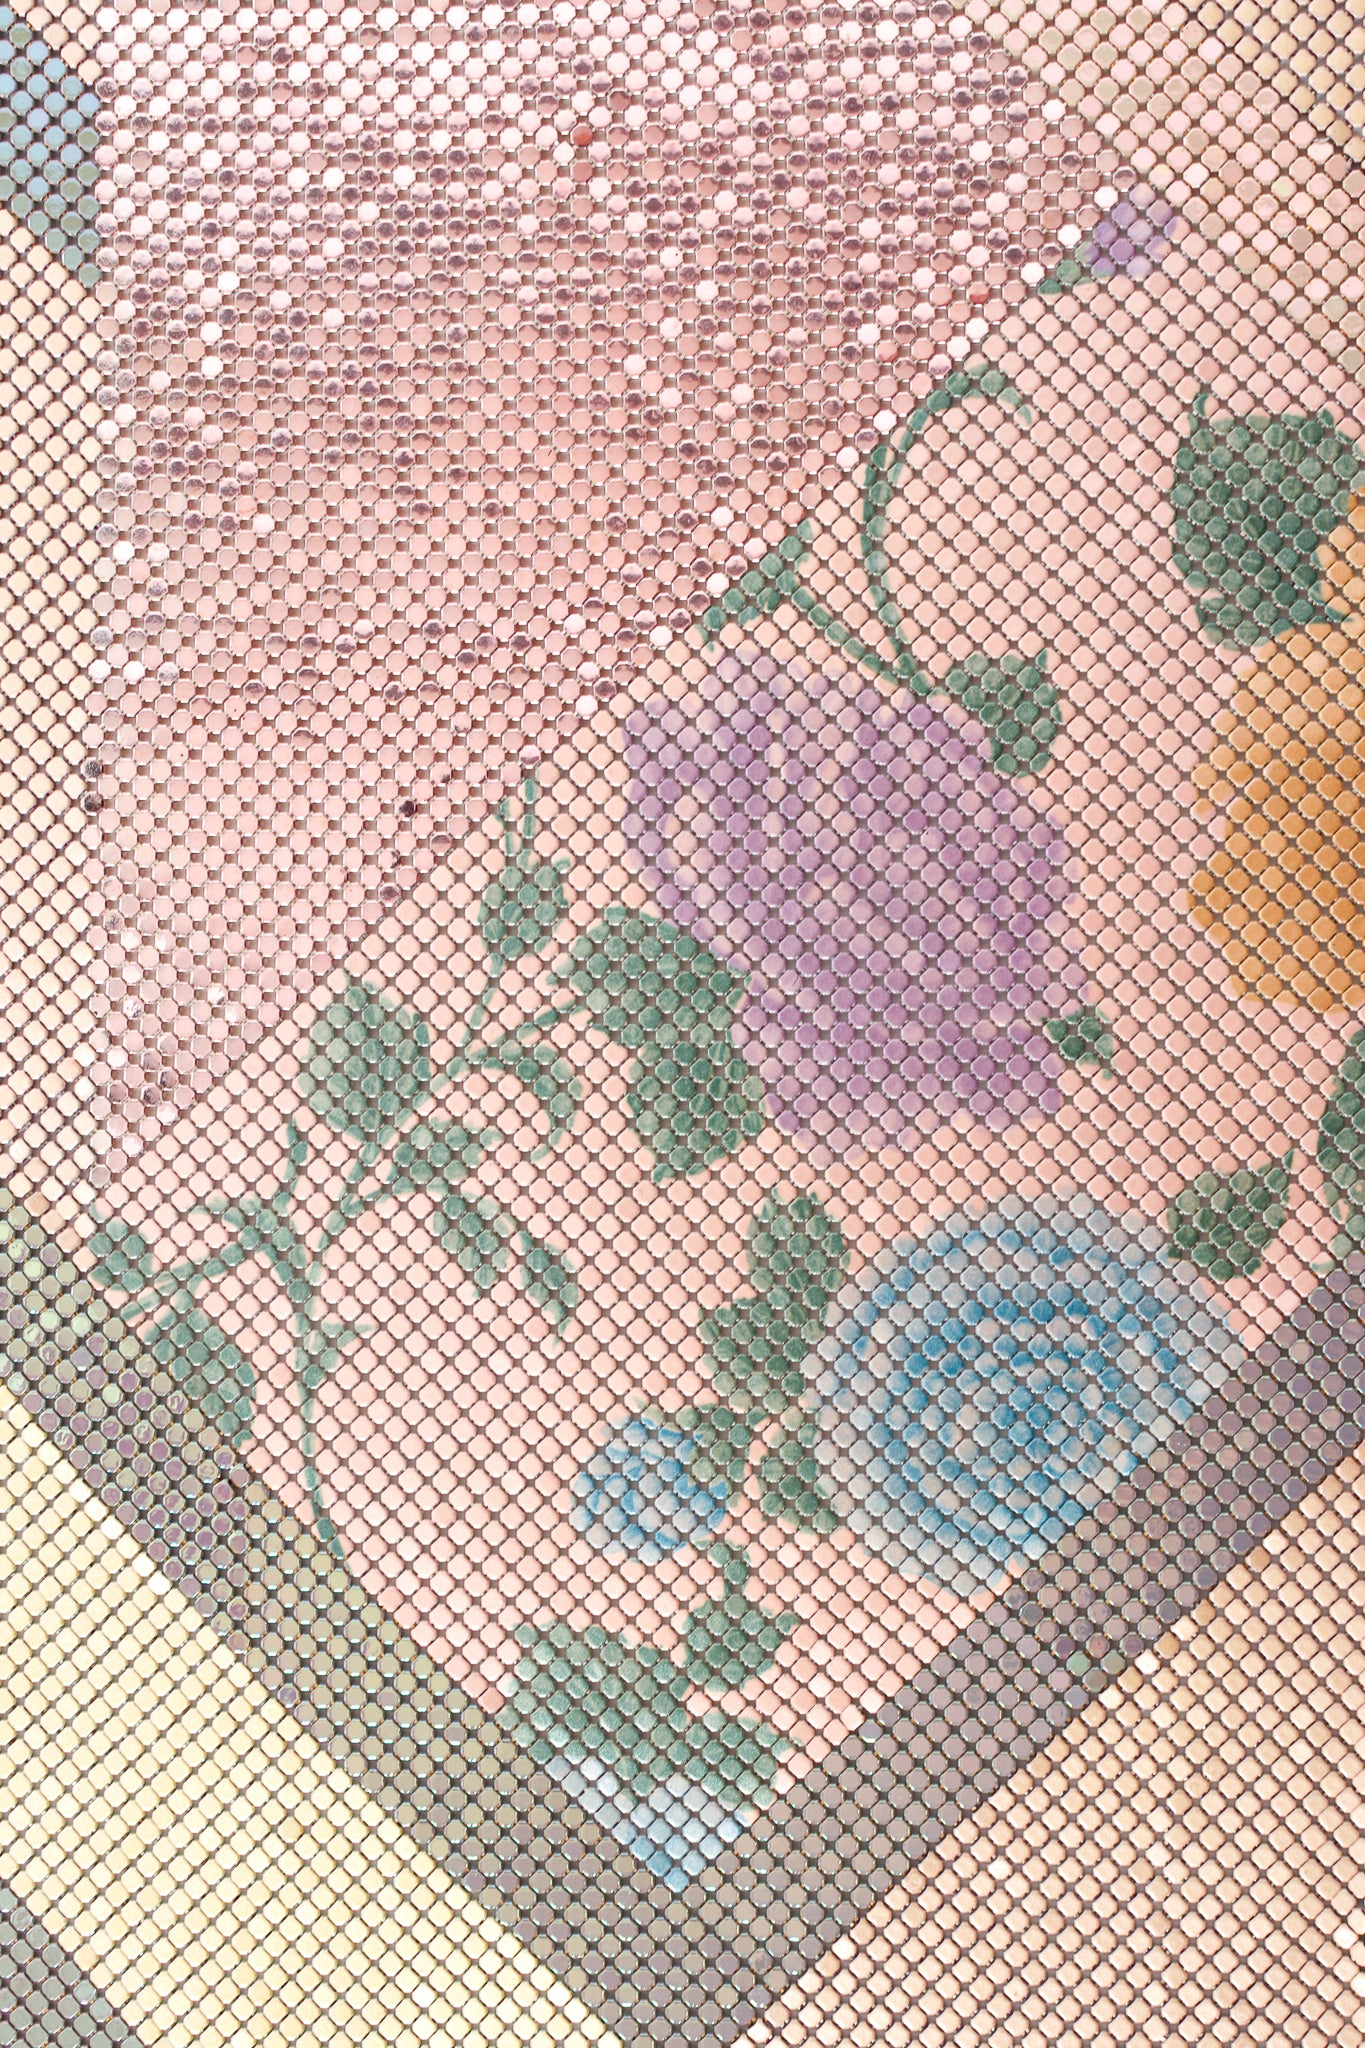 Vintage Anthony Ferrara Iridescent Floral Pointed Metal Mesh Halter detail Recess LA